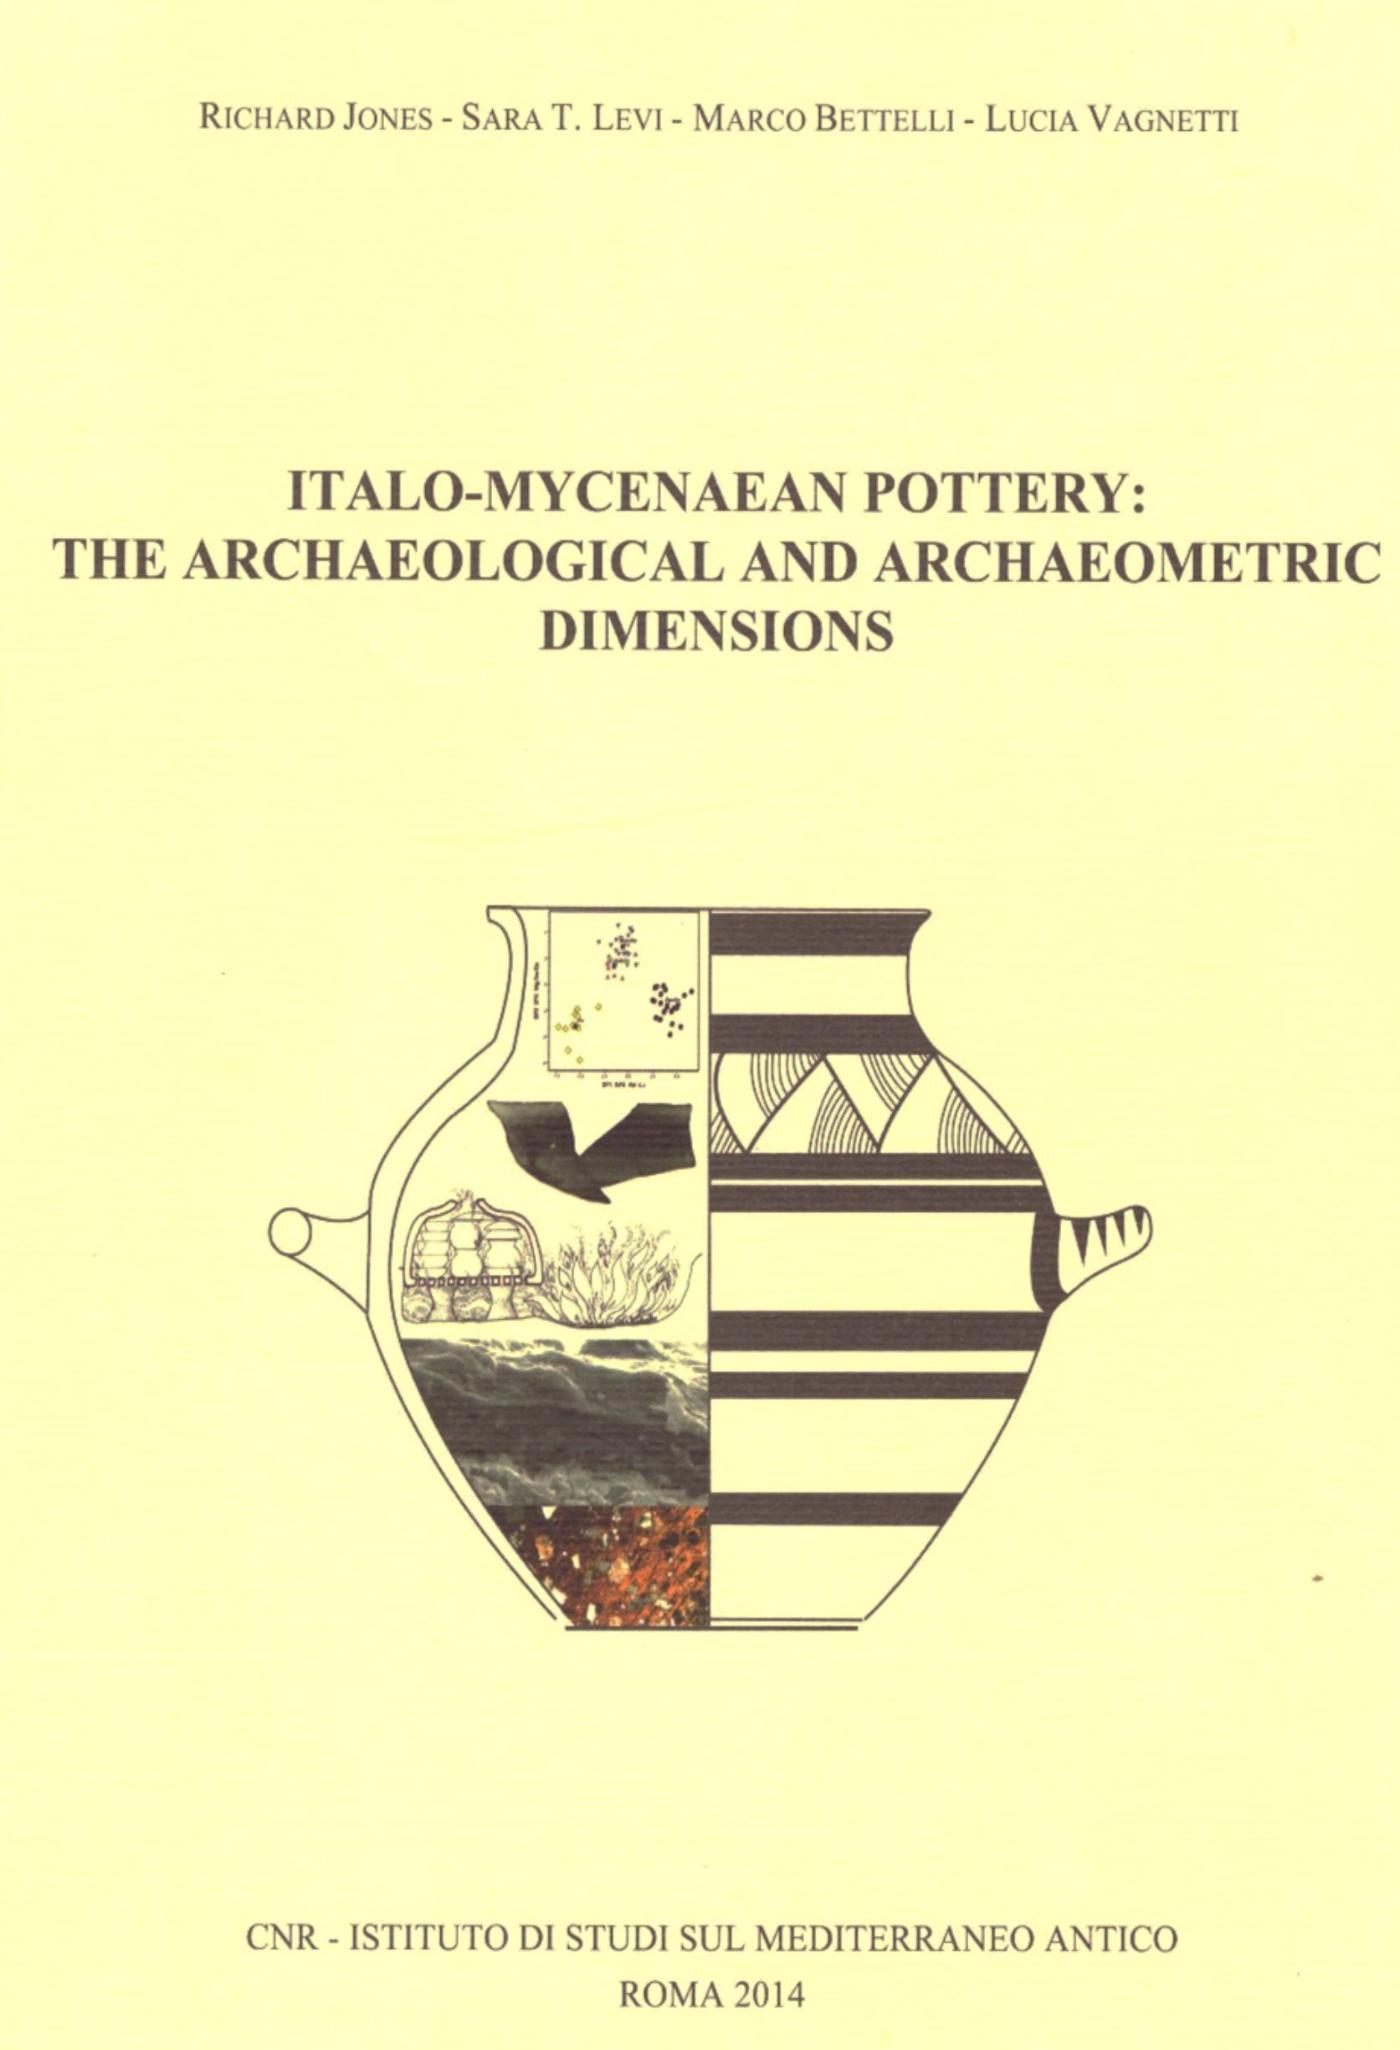 Decorated Mycenaean pottery